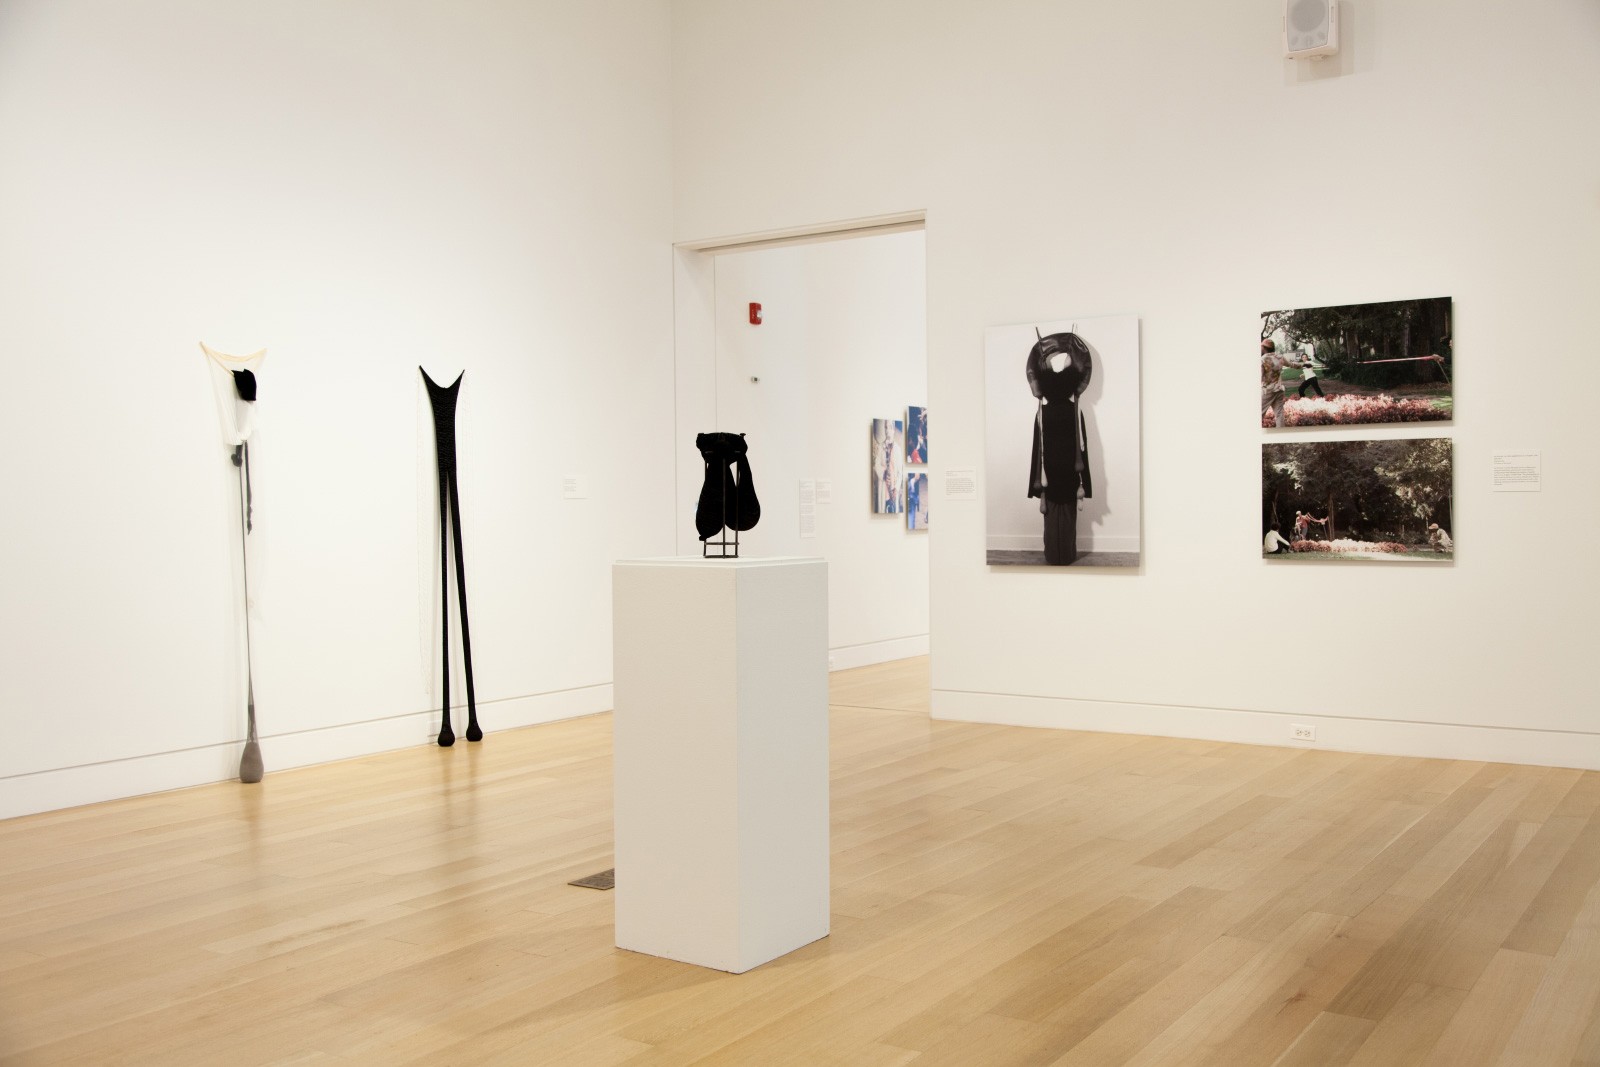 Senga Nengudi: Improvisational Gestures, installation view, 2017